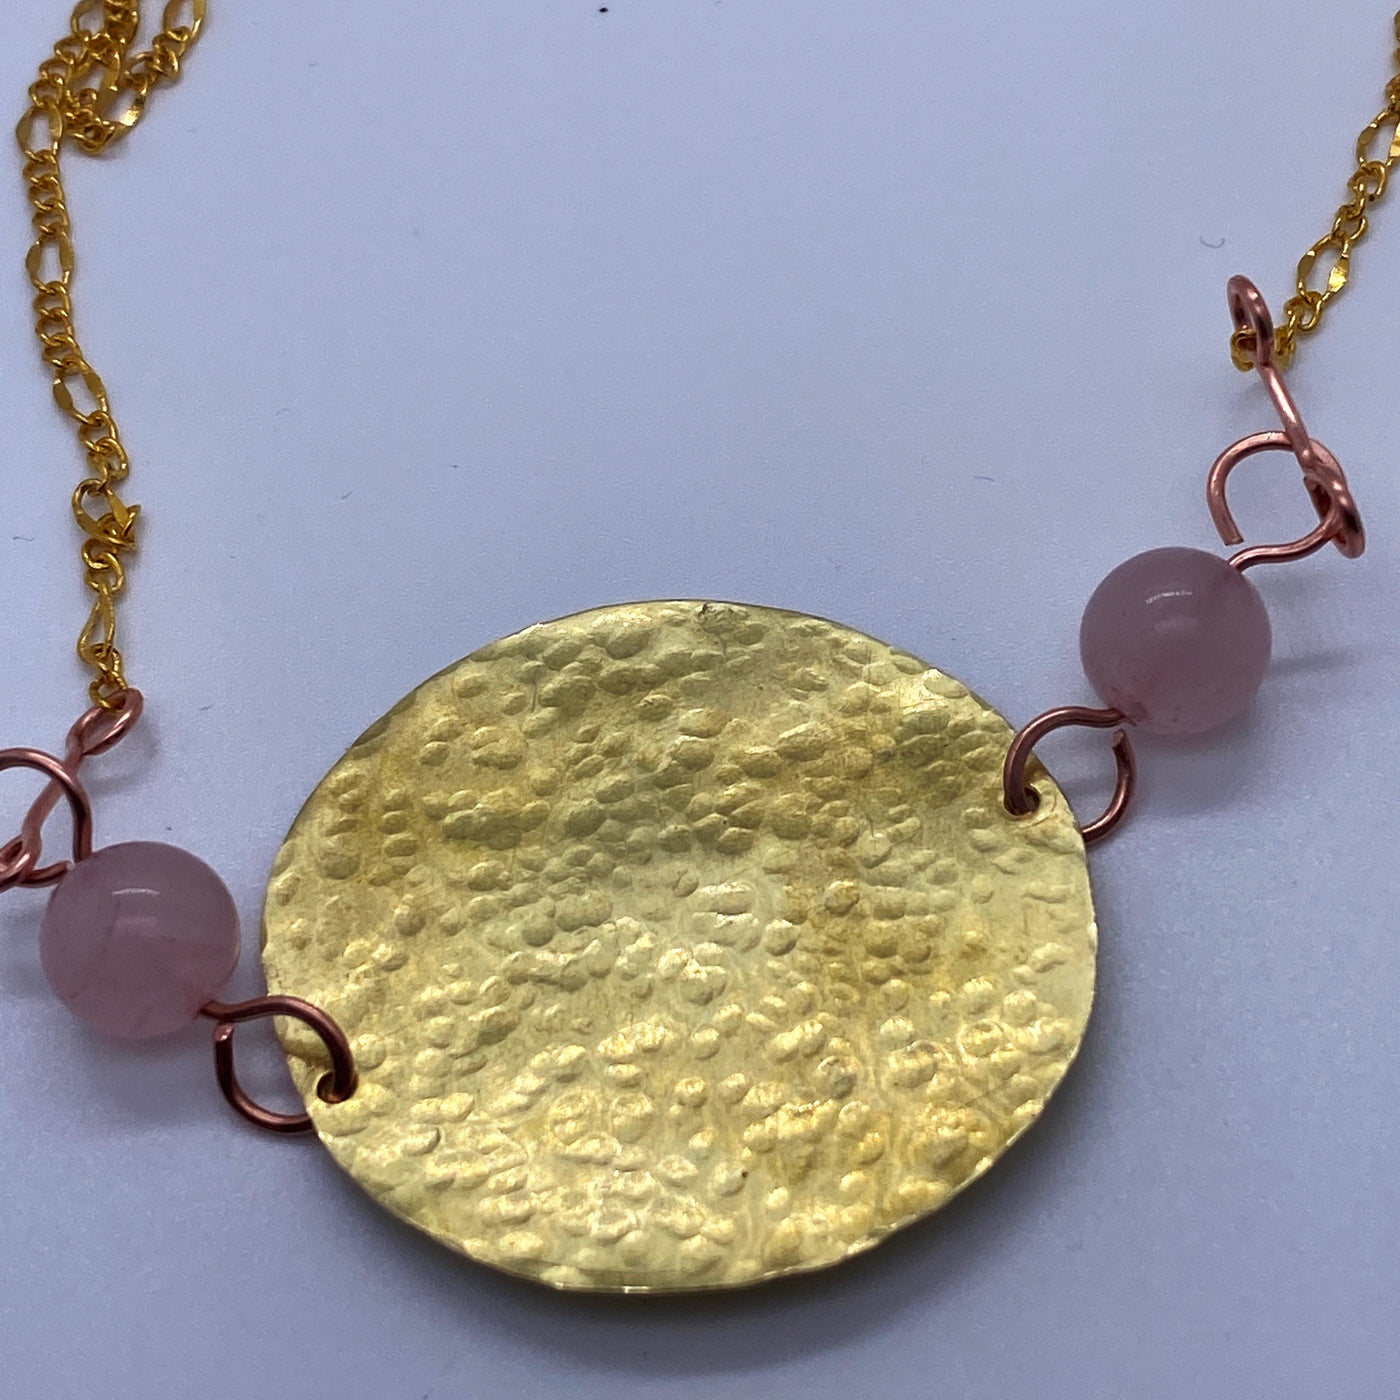 Rose quartz and brass central round pendant